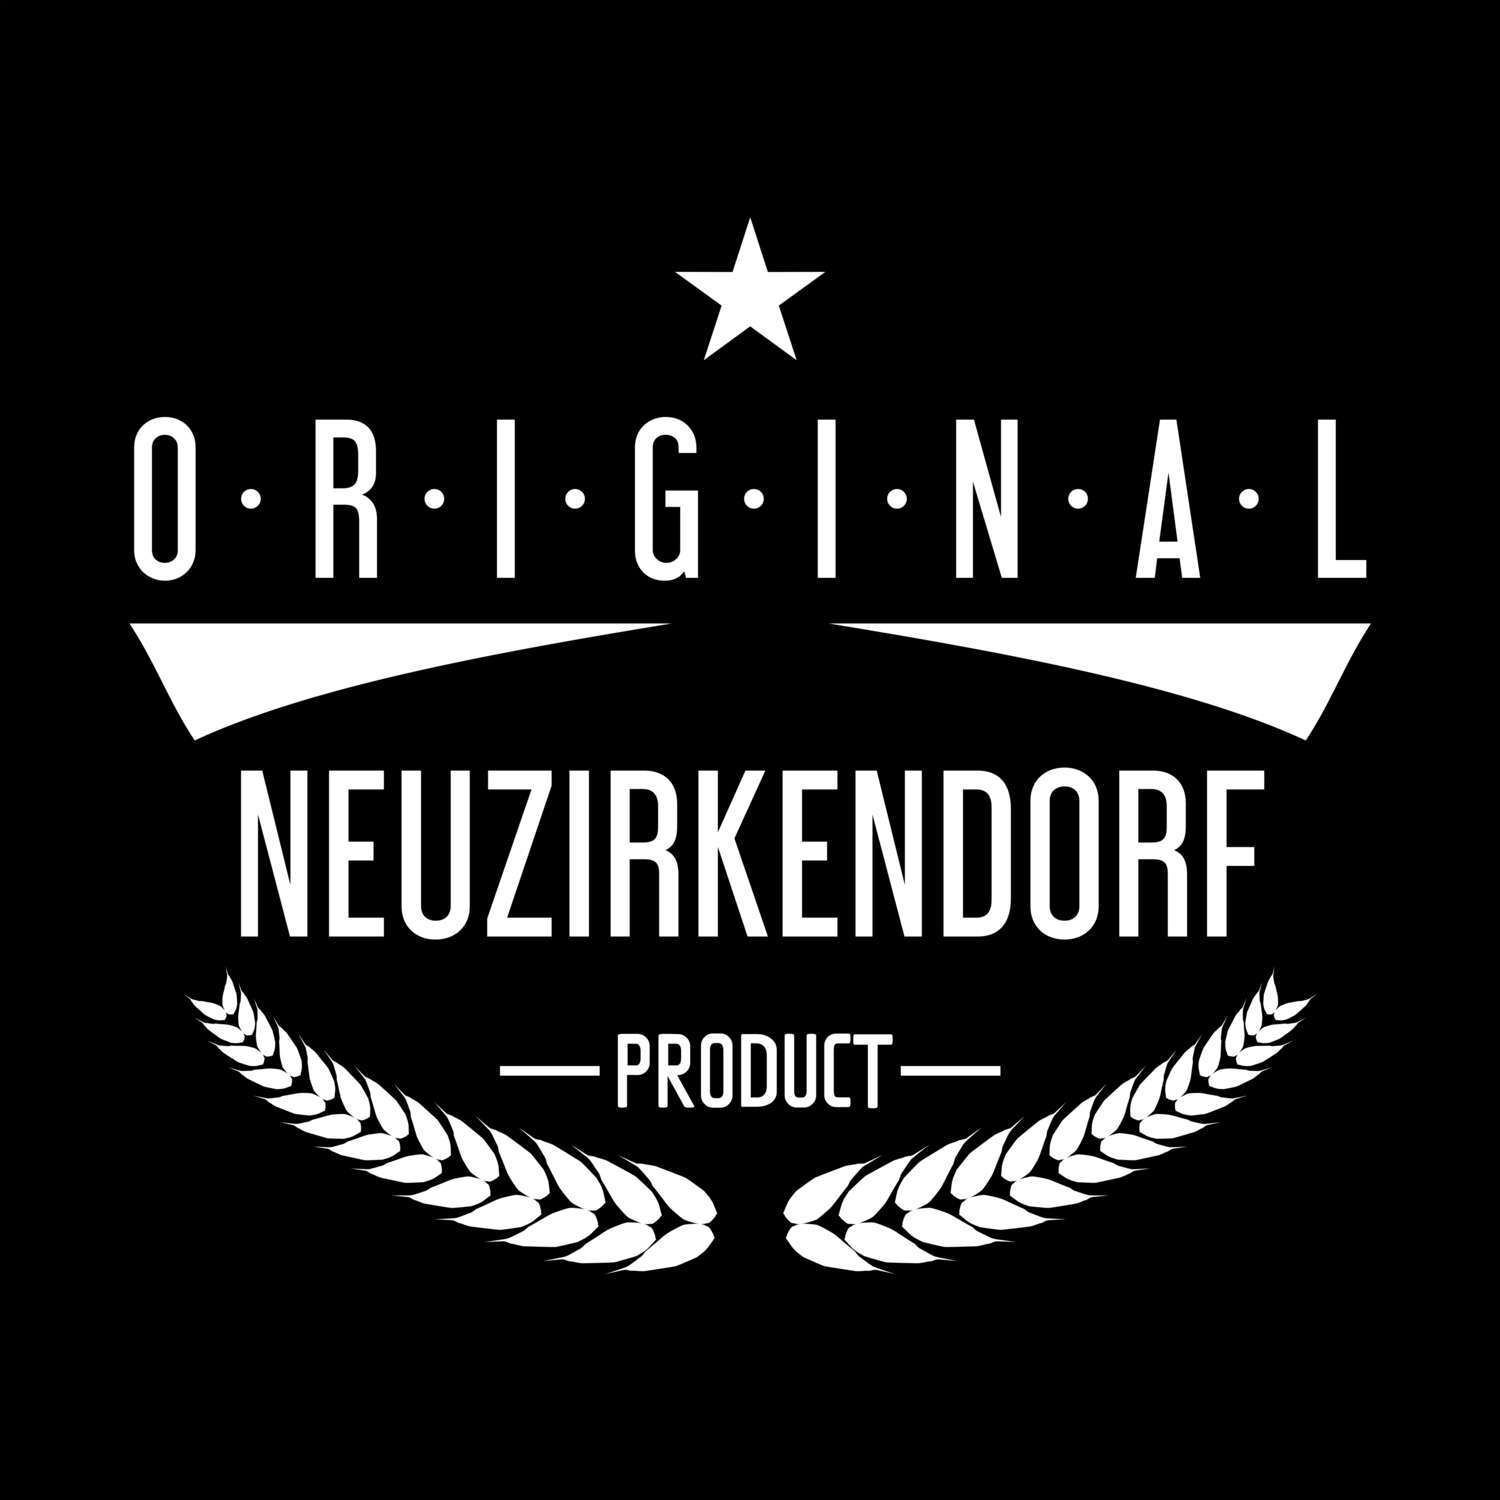 Neuzirkendorf T-Shirt »Original Product«